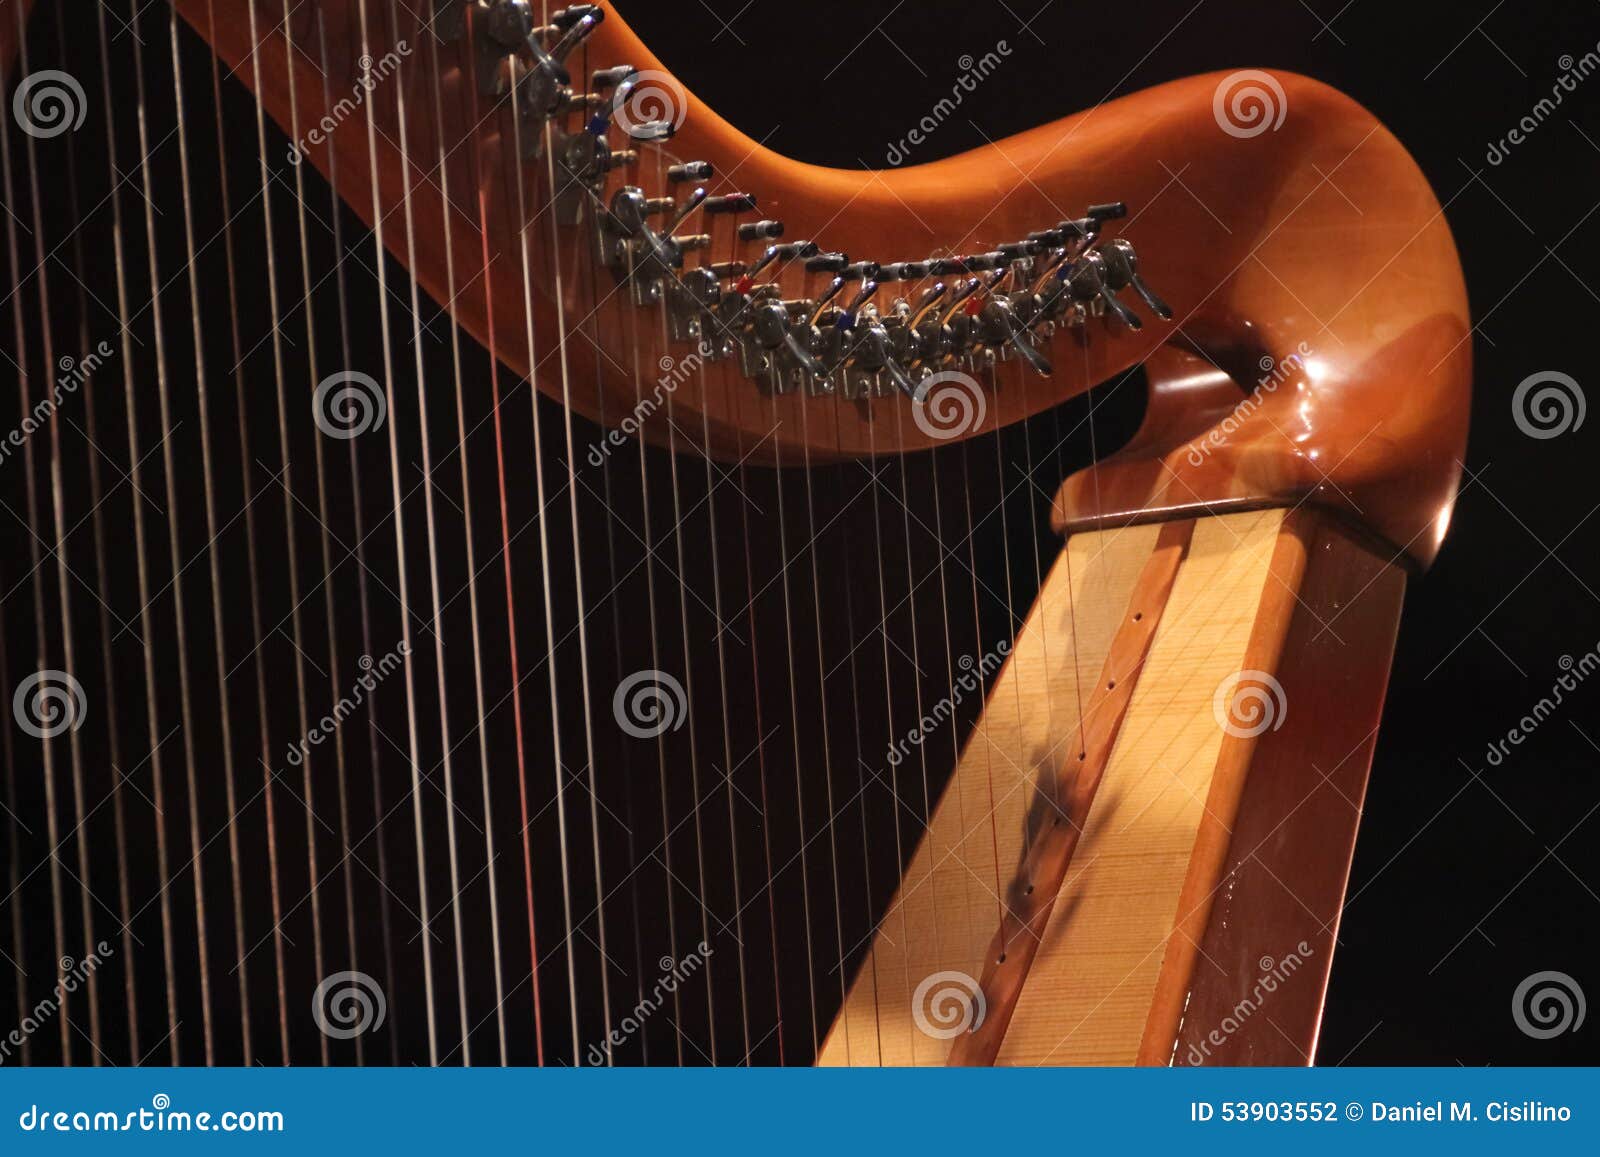 concert harp. close up.